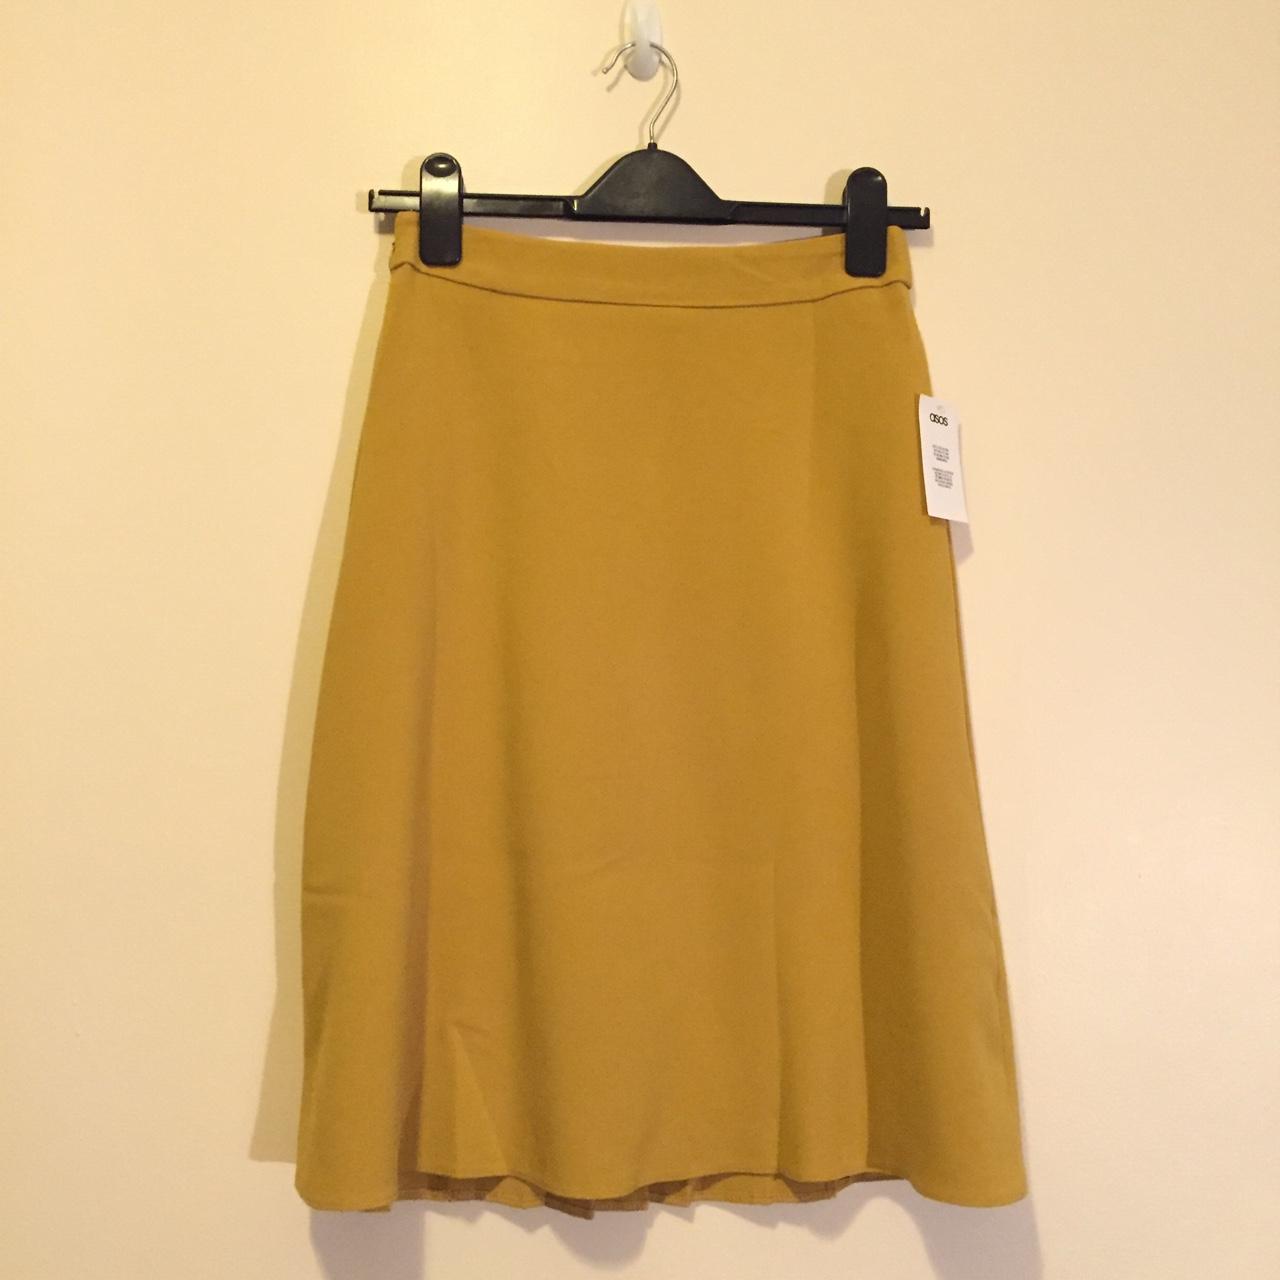 Asos mustard yellow pleated panel midi skirt size 8.... - Depop